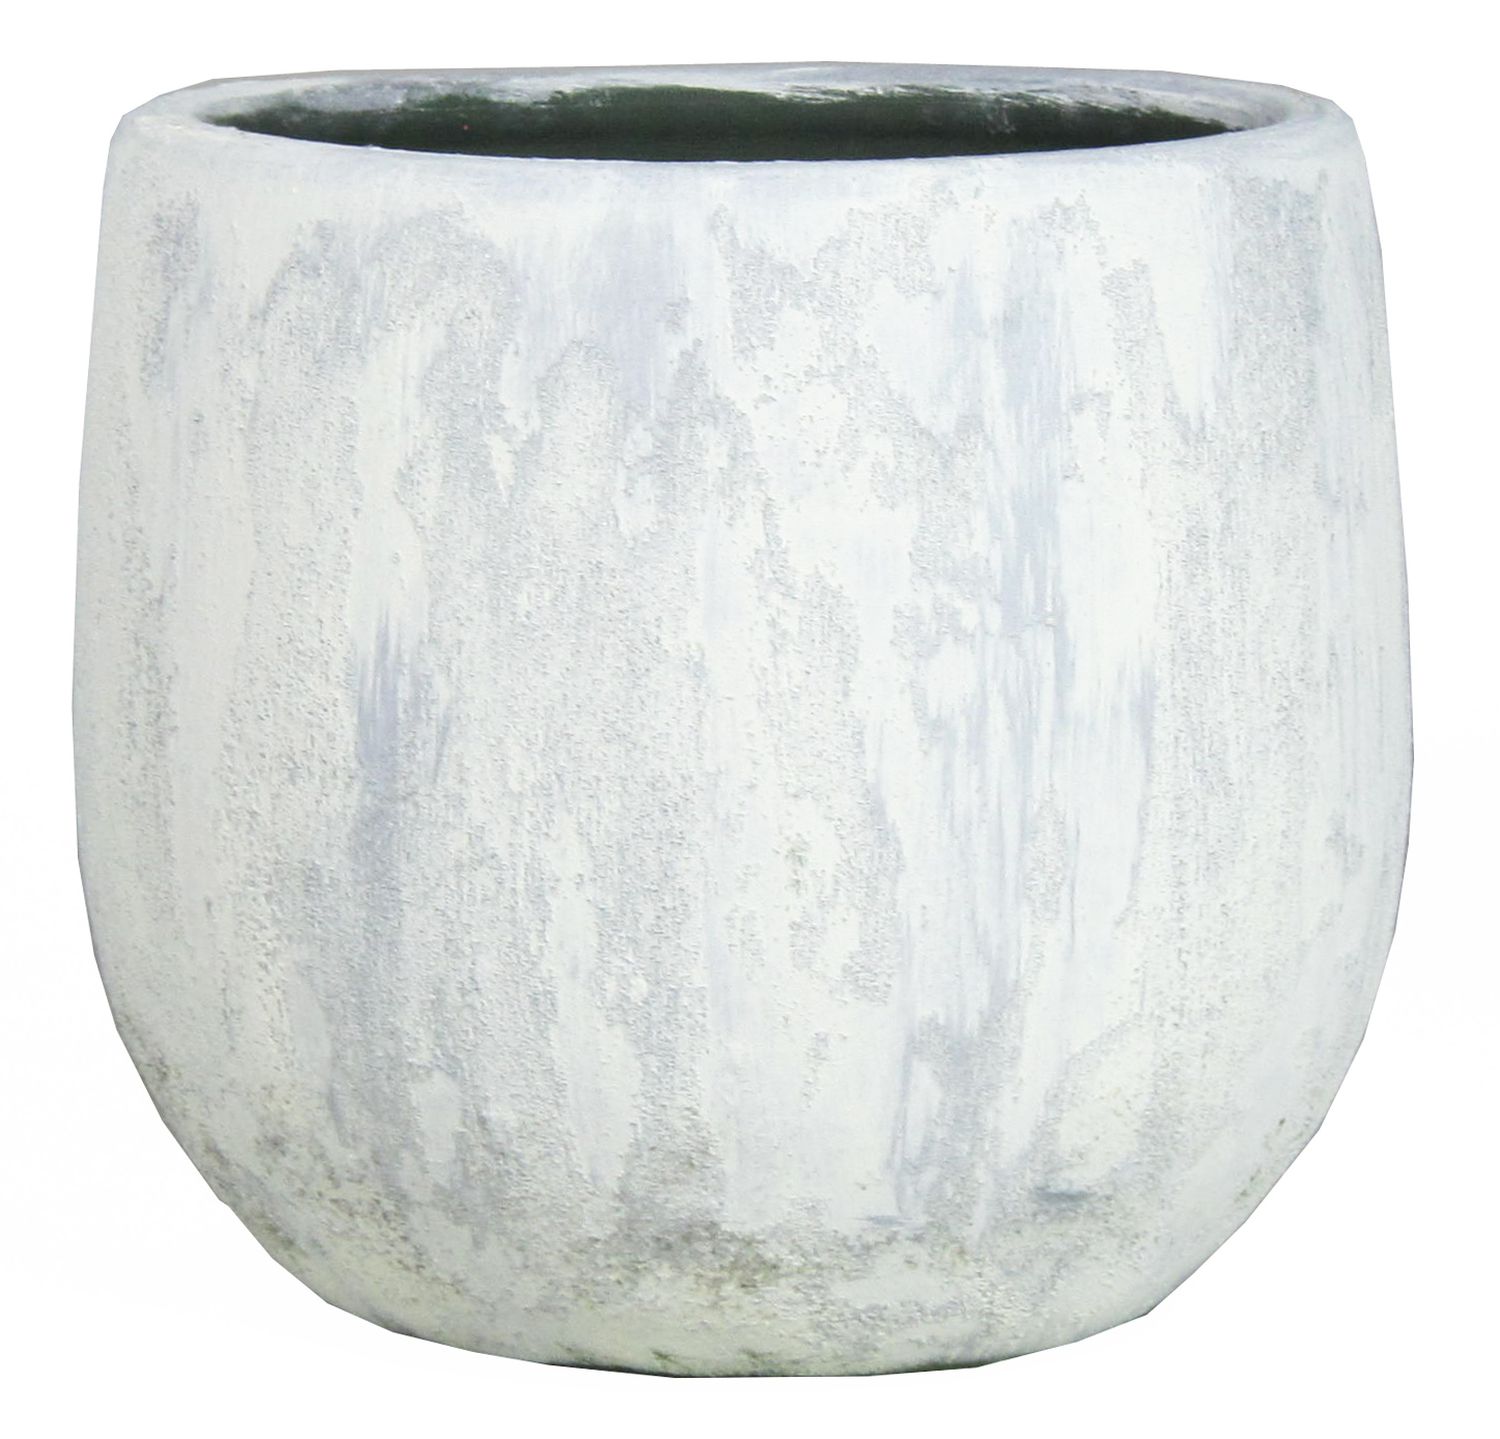 Keramik Übertopf MORTAZA mit Maserung, 14cm, grau-weiß-eisblau, Ø16cm